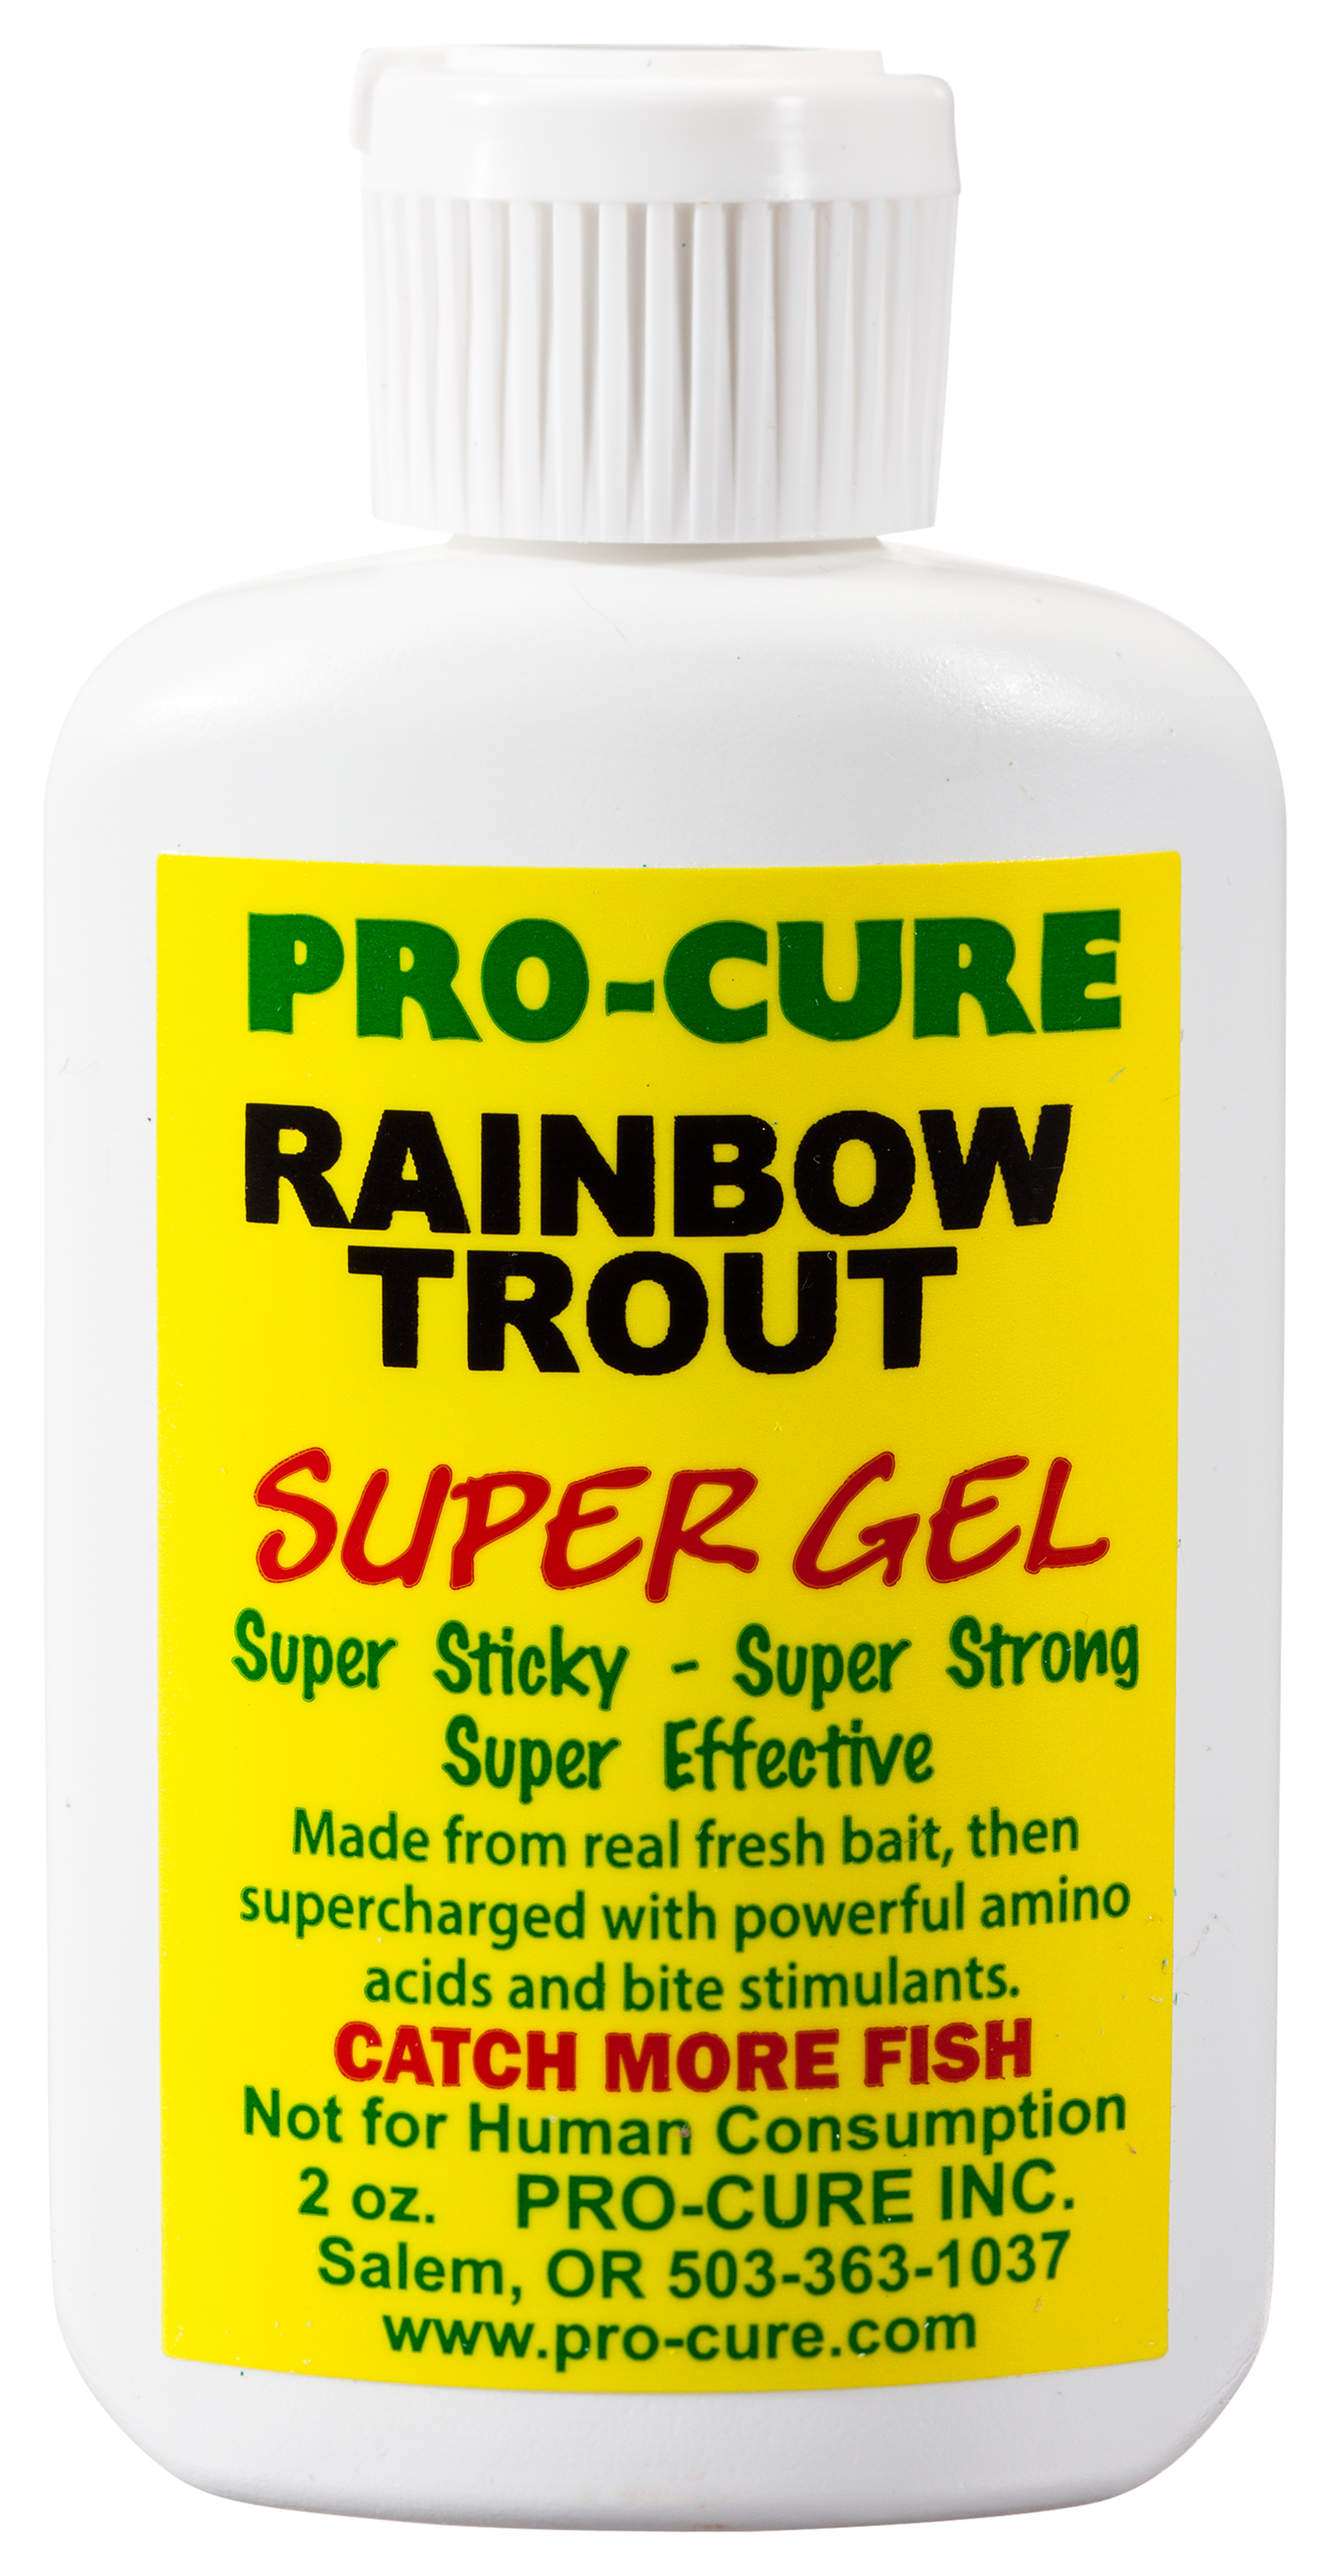 Pro-Cure 2 oz Super Gel, Trophy Bass